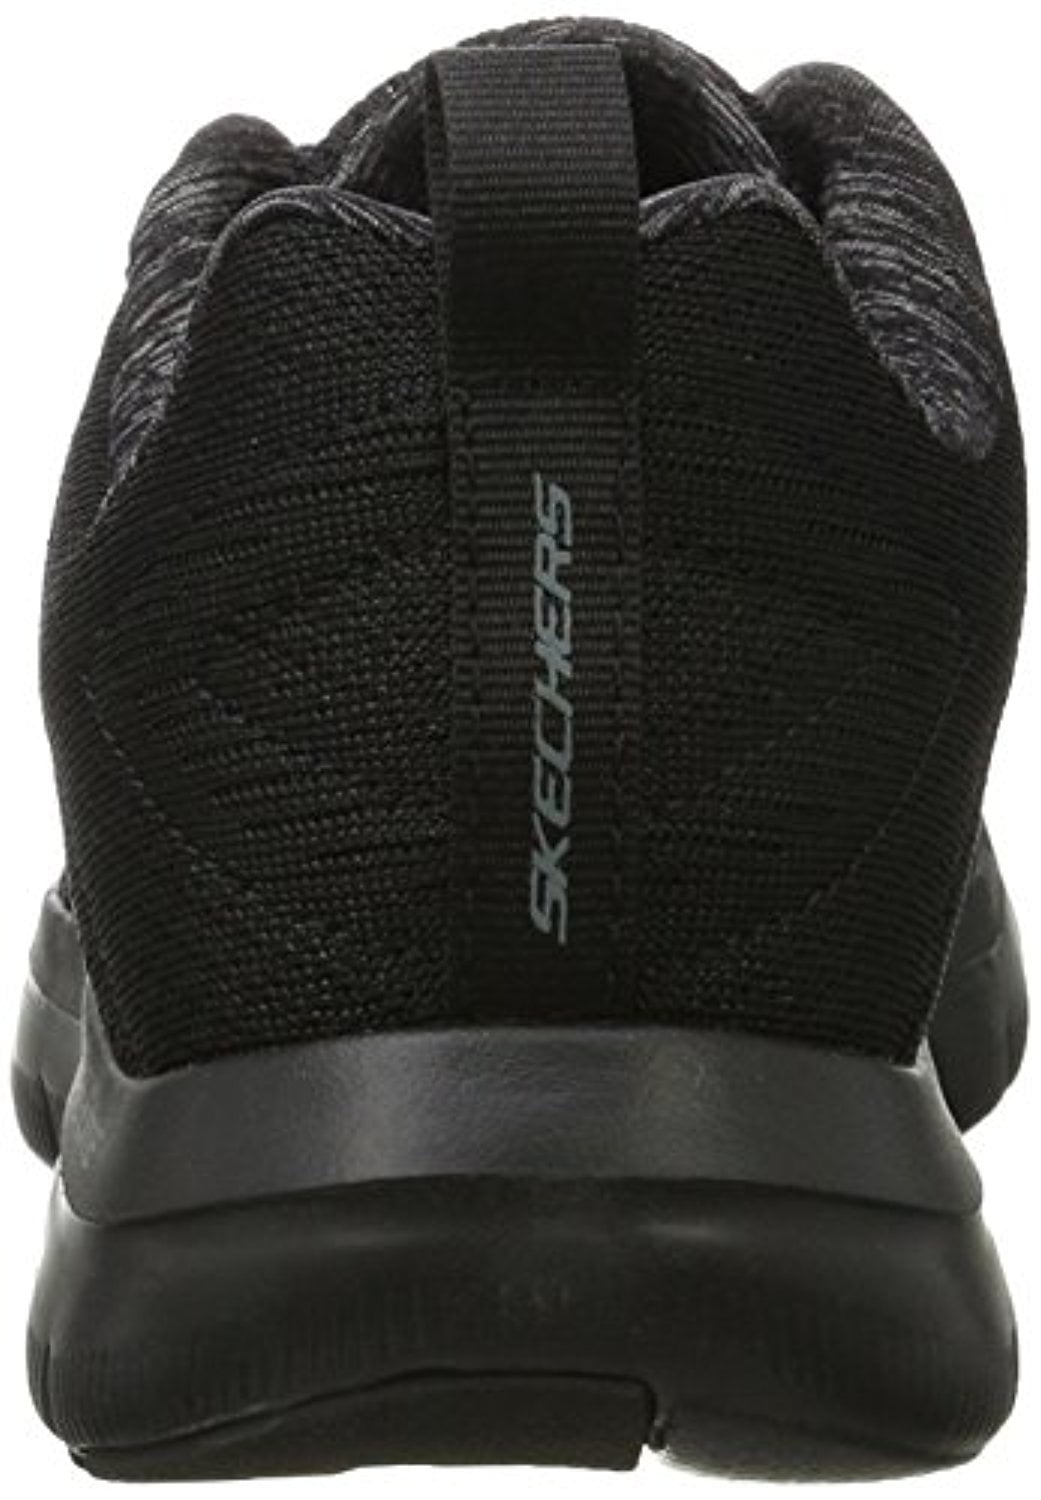 52185 Black Skechers Shoes Comfort Sport Run Train Athletic - Walmart.com